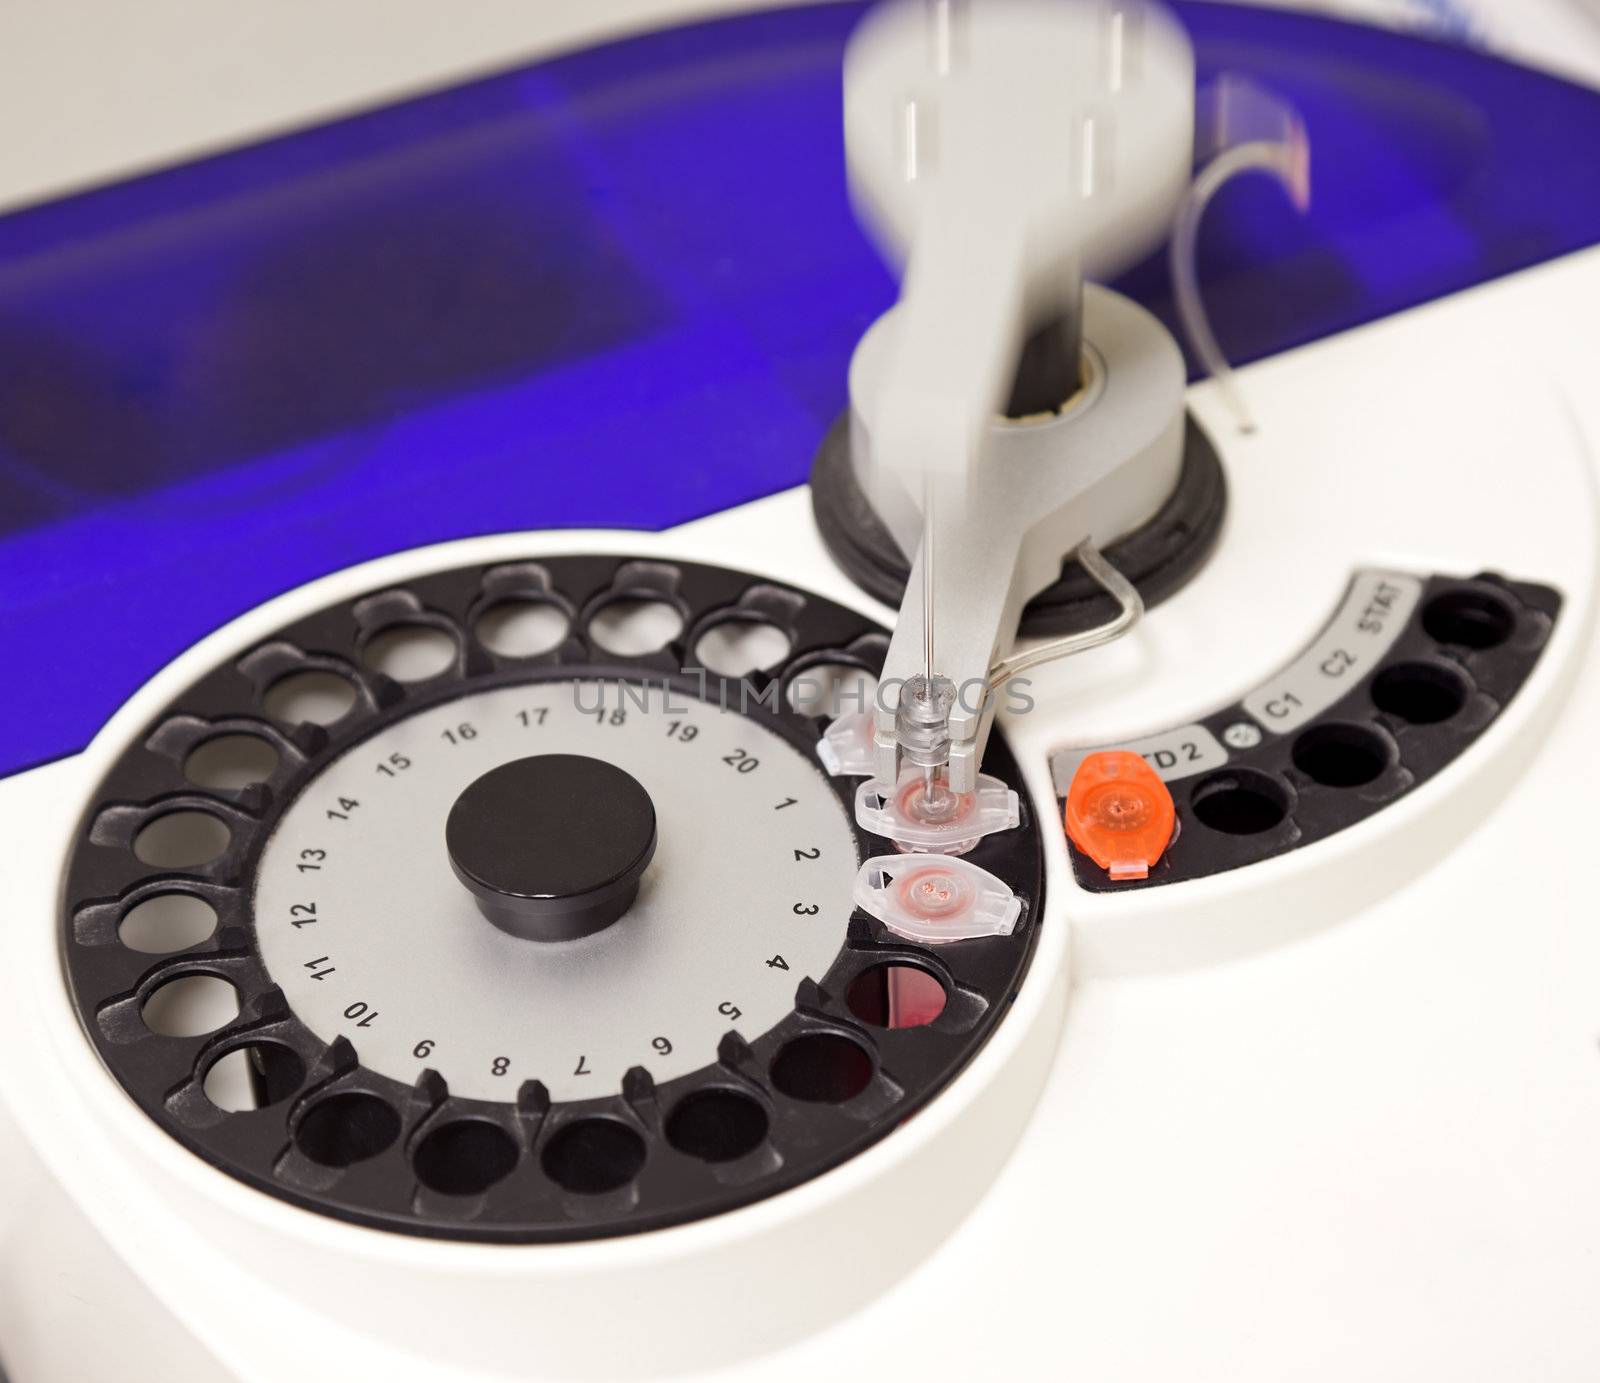 Electronic blood sample machine by vilevi